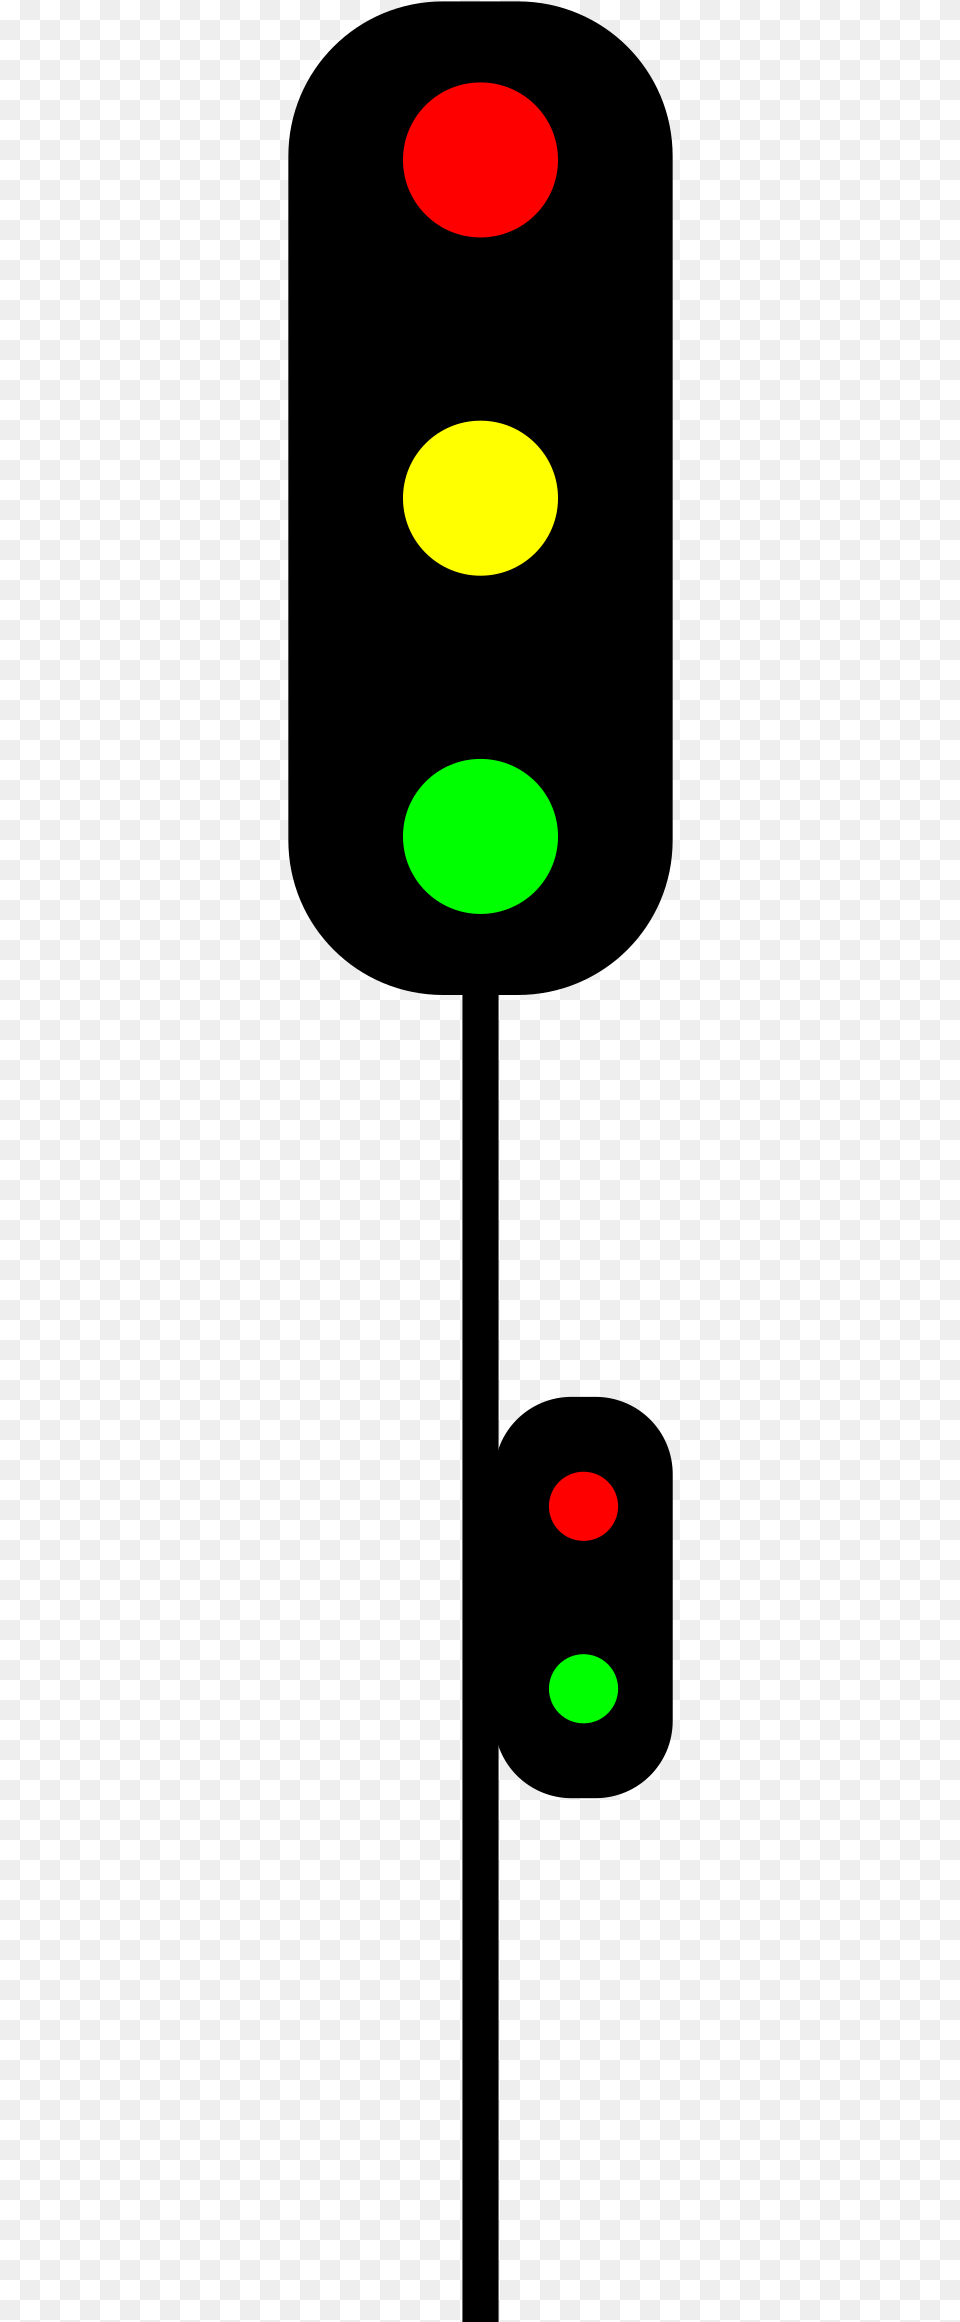 Big Traffic Light Cartoon, Lighting, Traffic Light Png Image